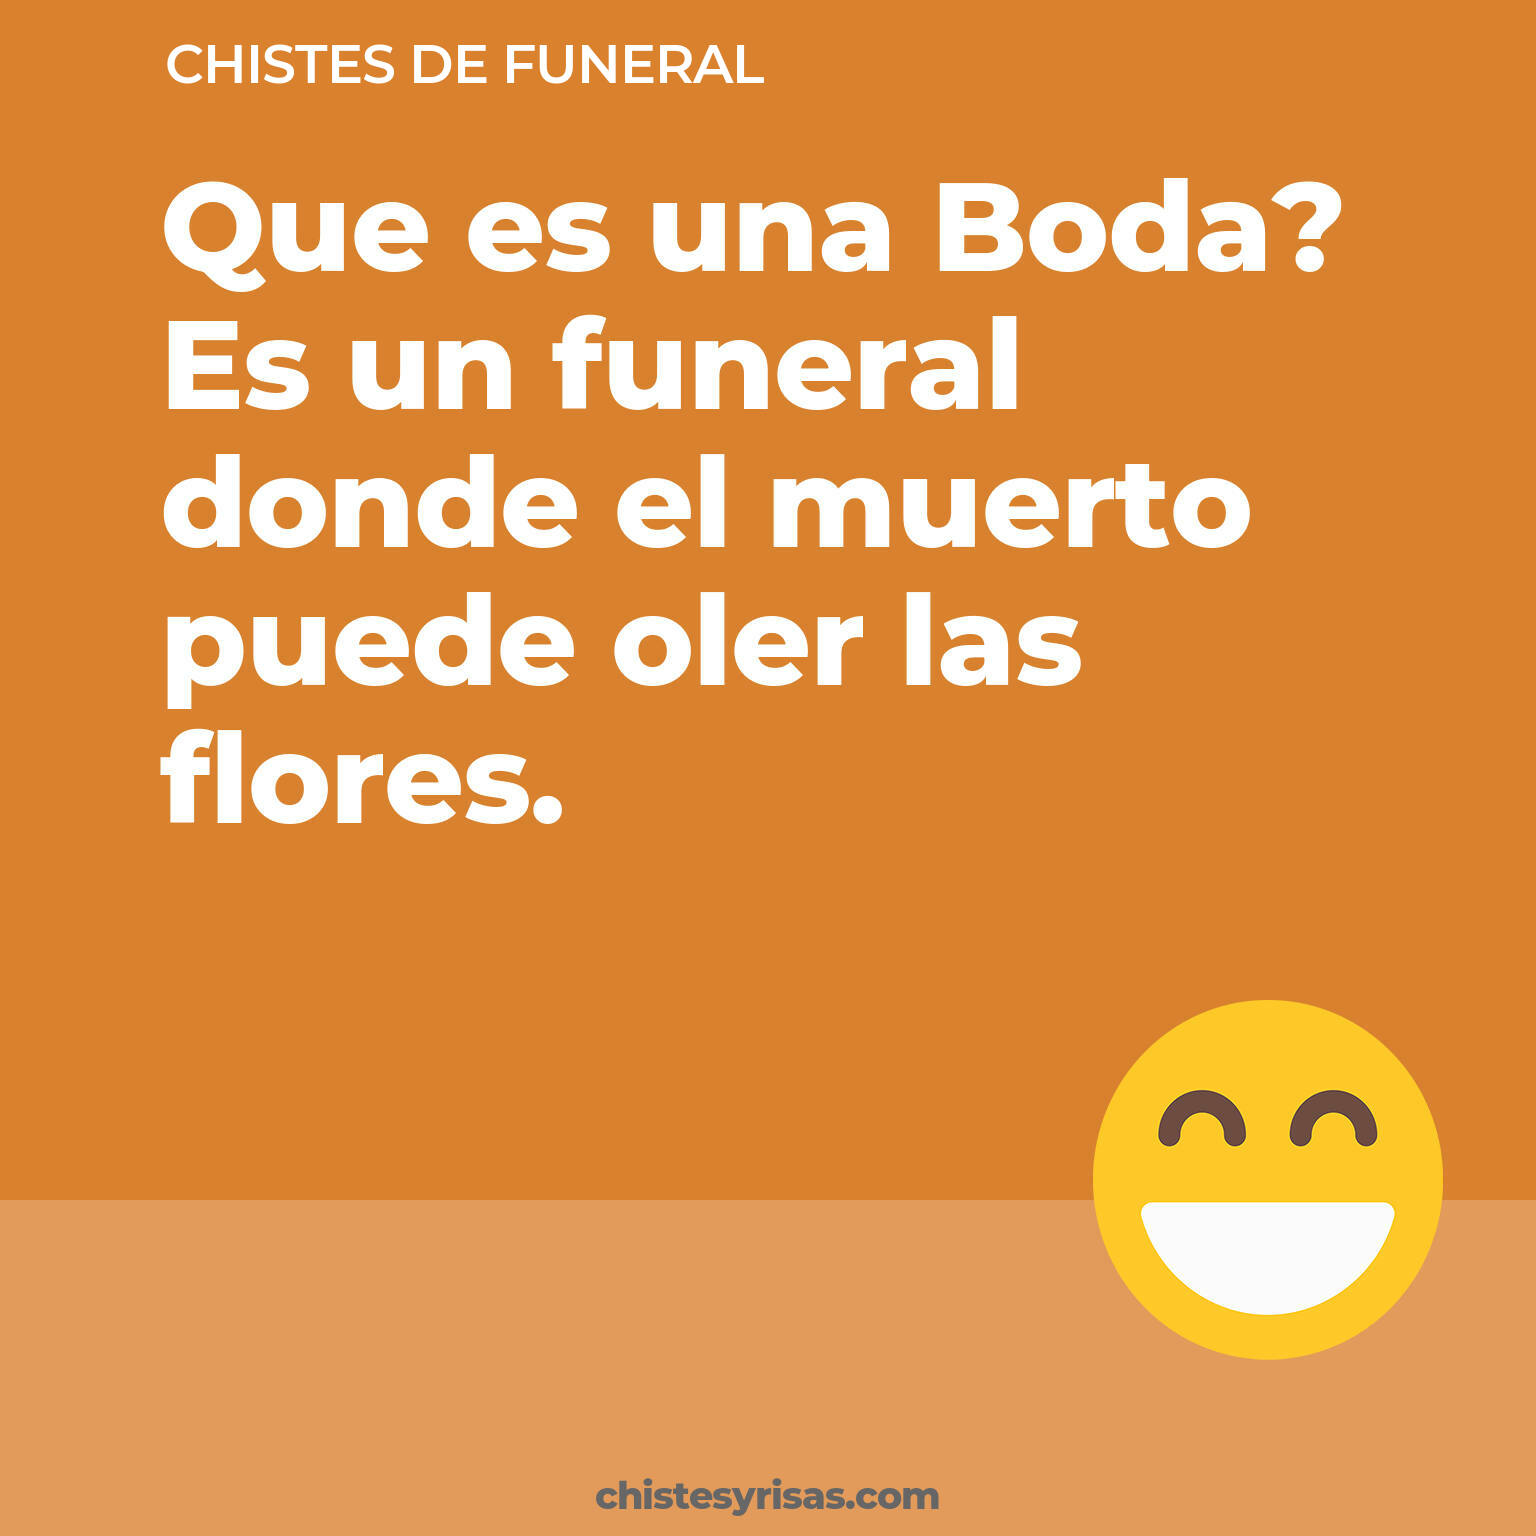 chistes de Funeral cortos